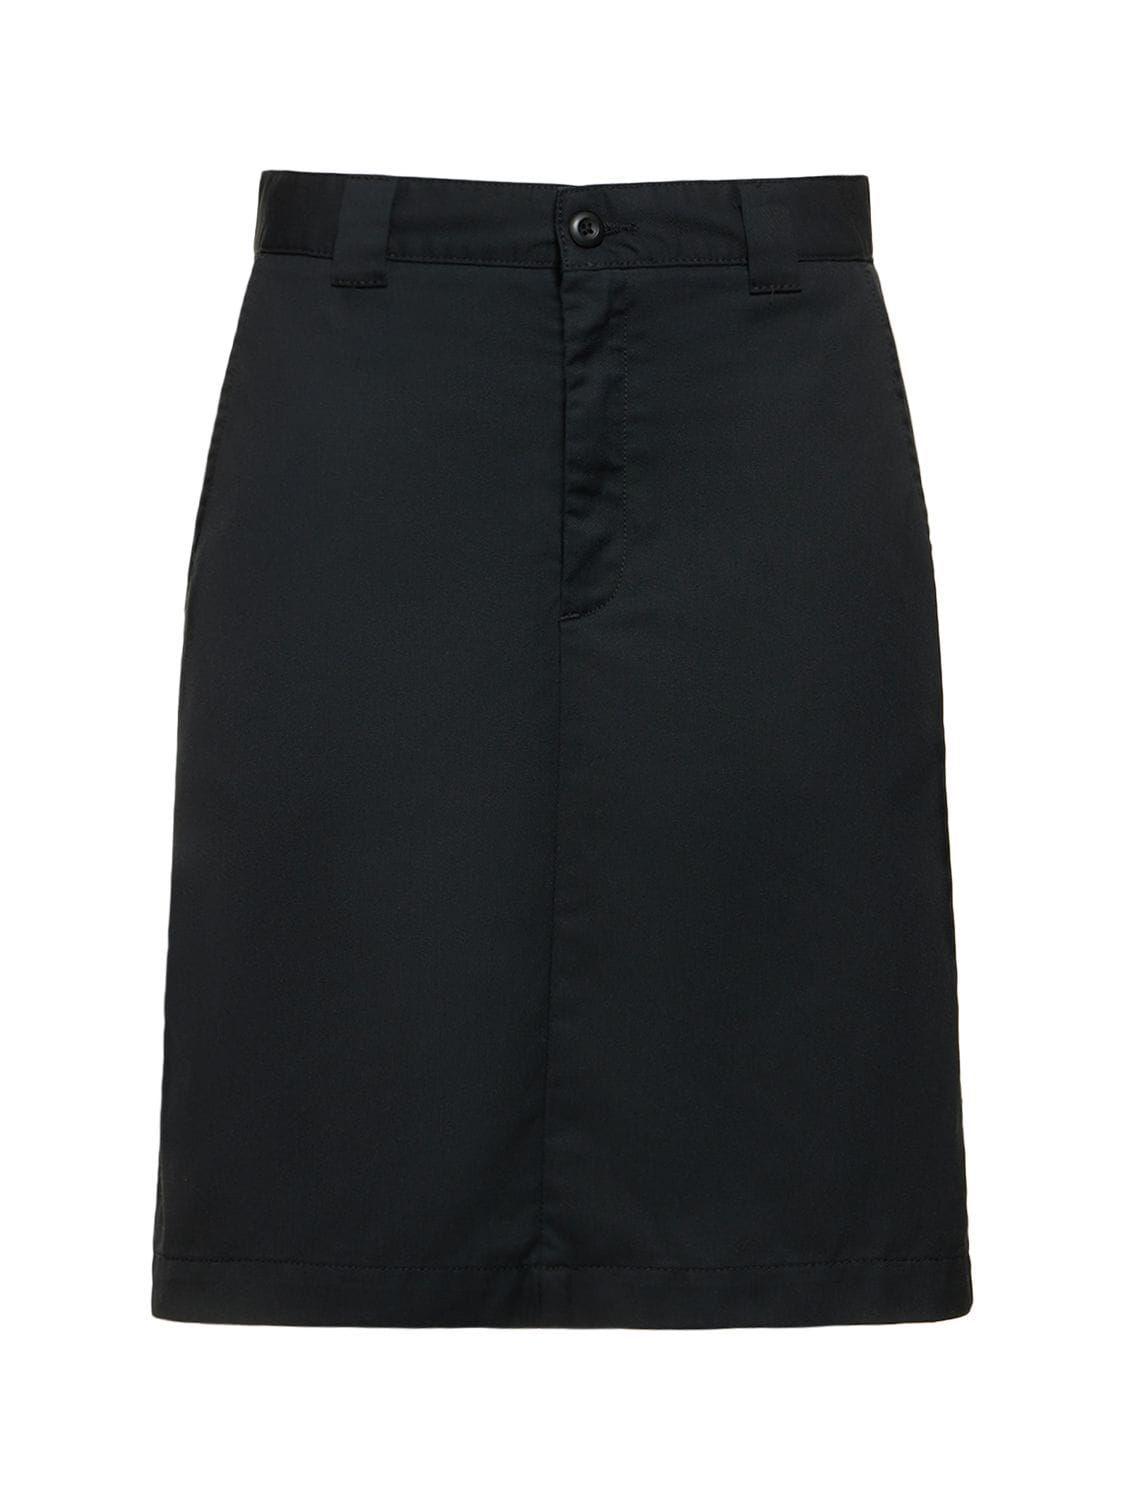 Carhartt WIP Master Skirt in Black | Lyst